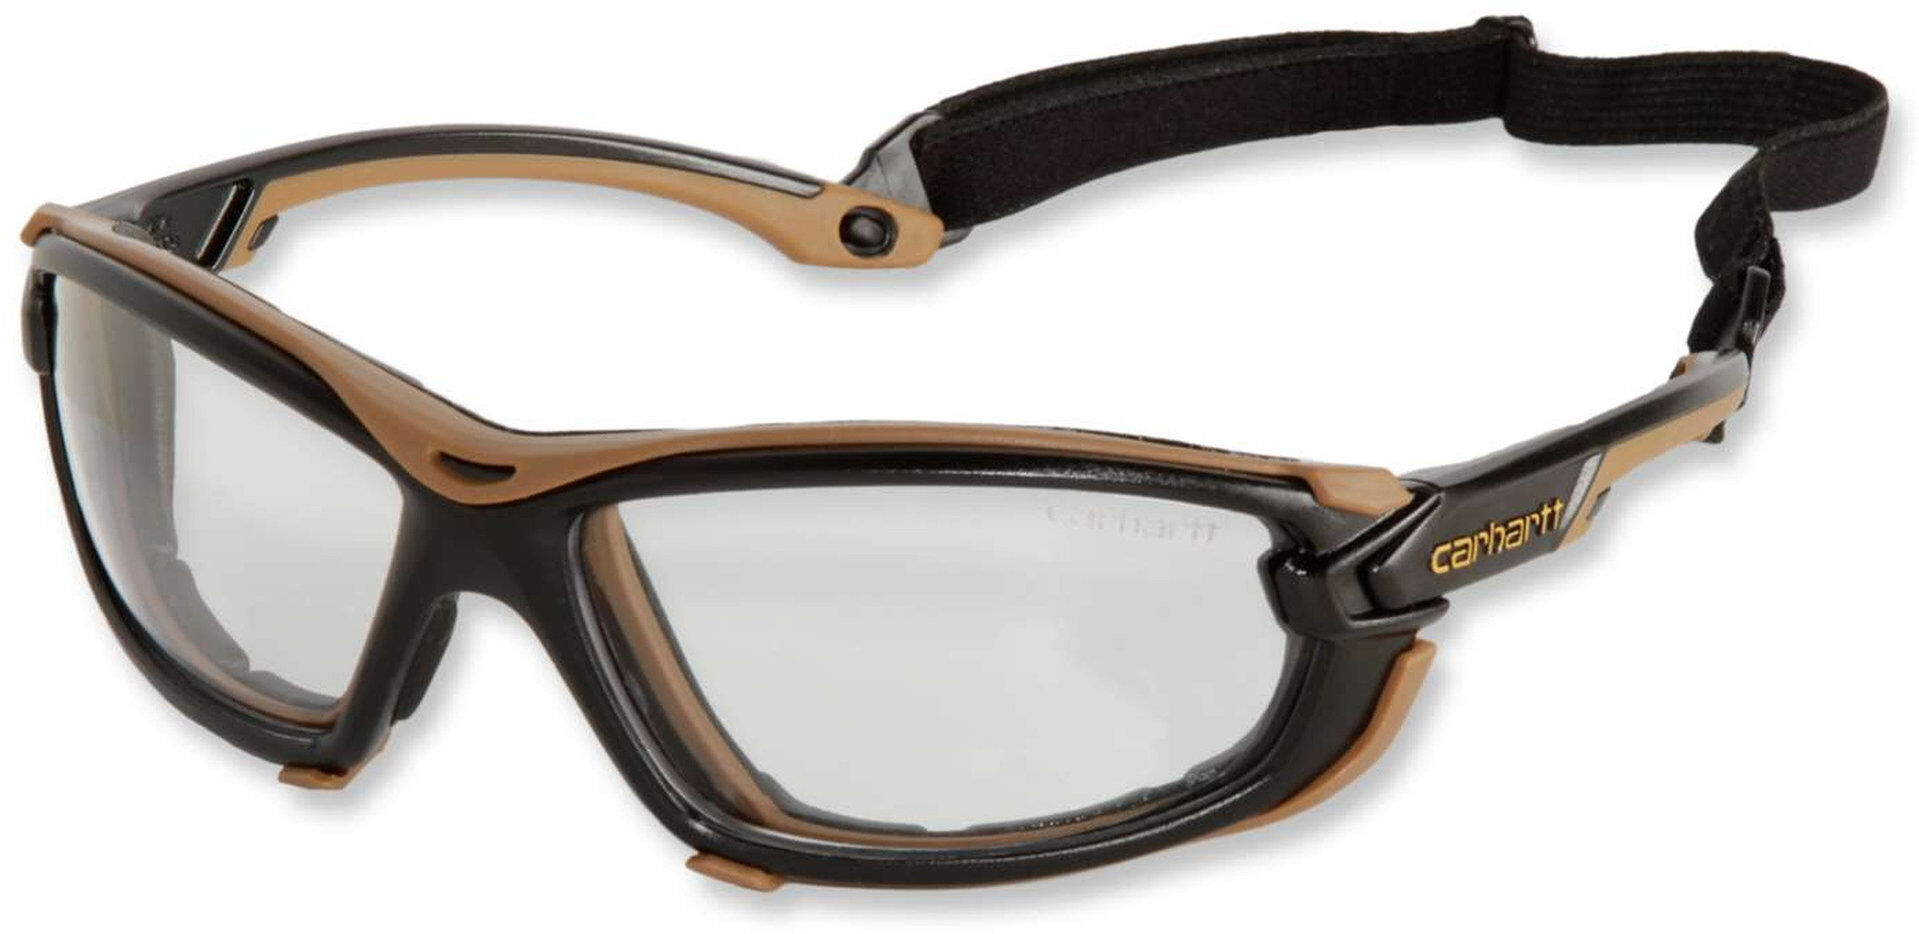 Carhartt Toccoa Gafas de seguridad - transparente (un tamaño)